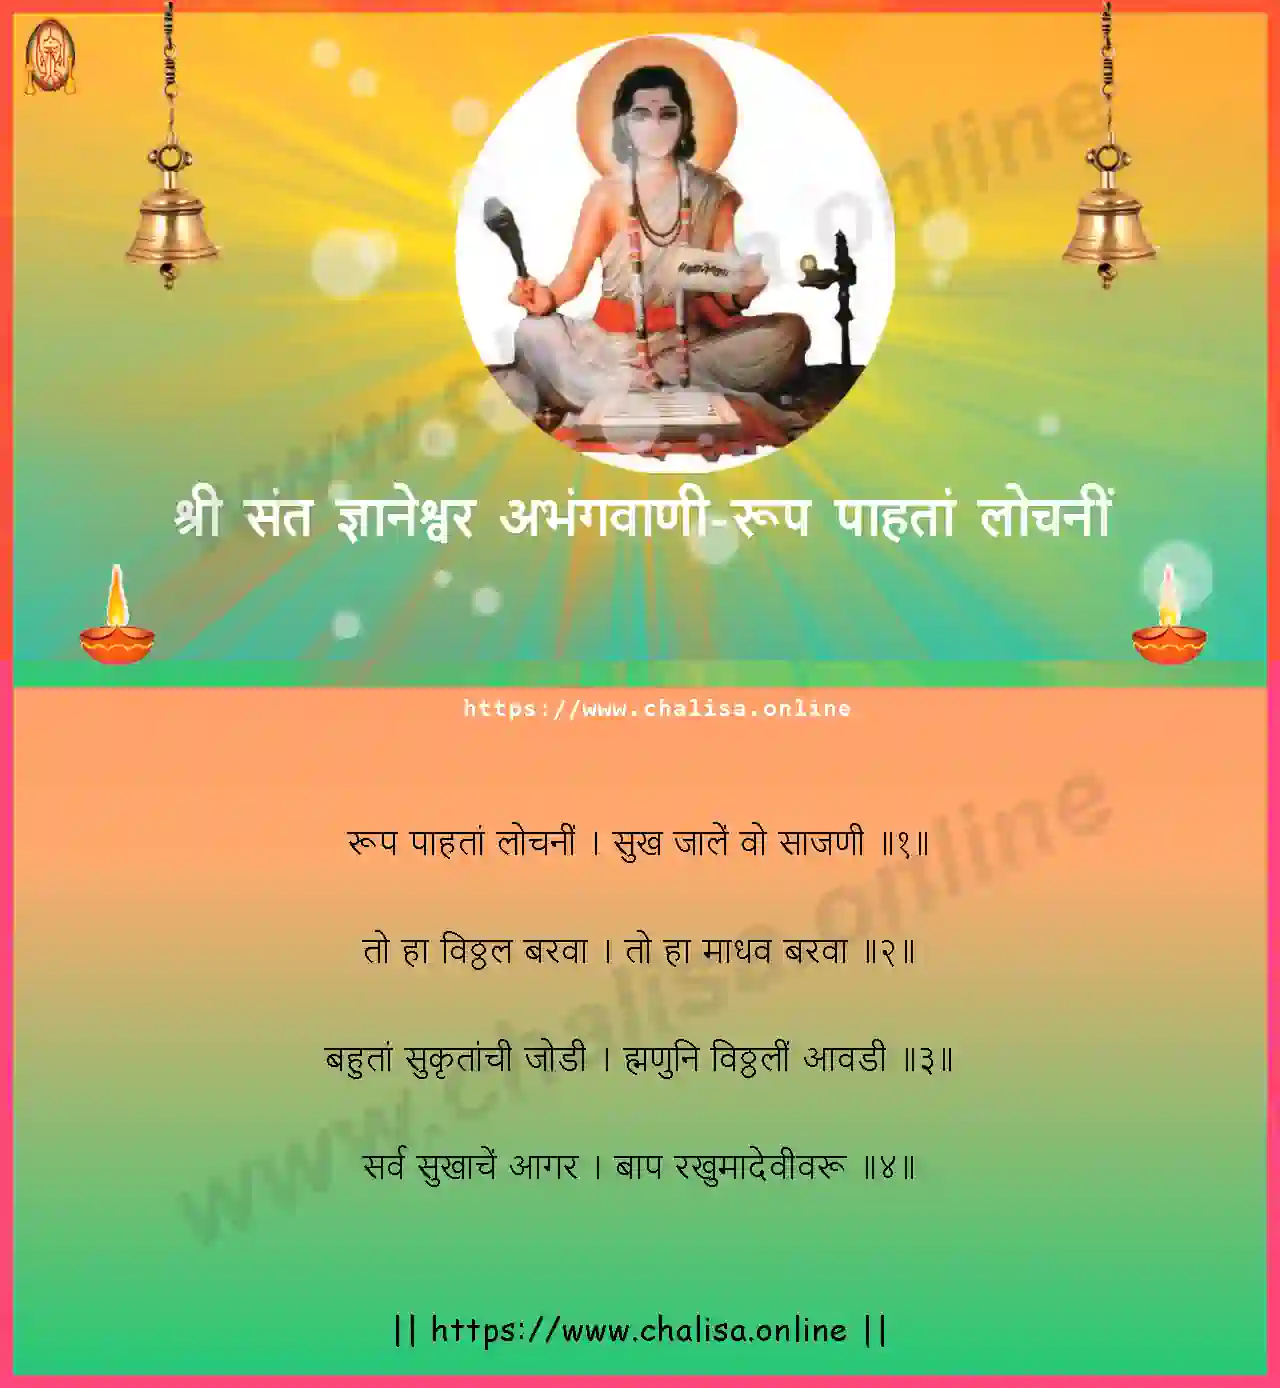 roop-pahata-lochani-shri-sant-dnyaneshwar-abhang-marathi-lyrics-download